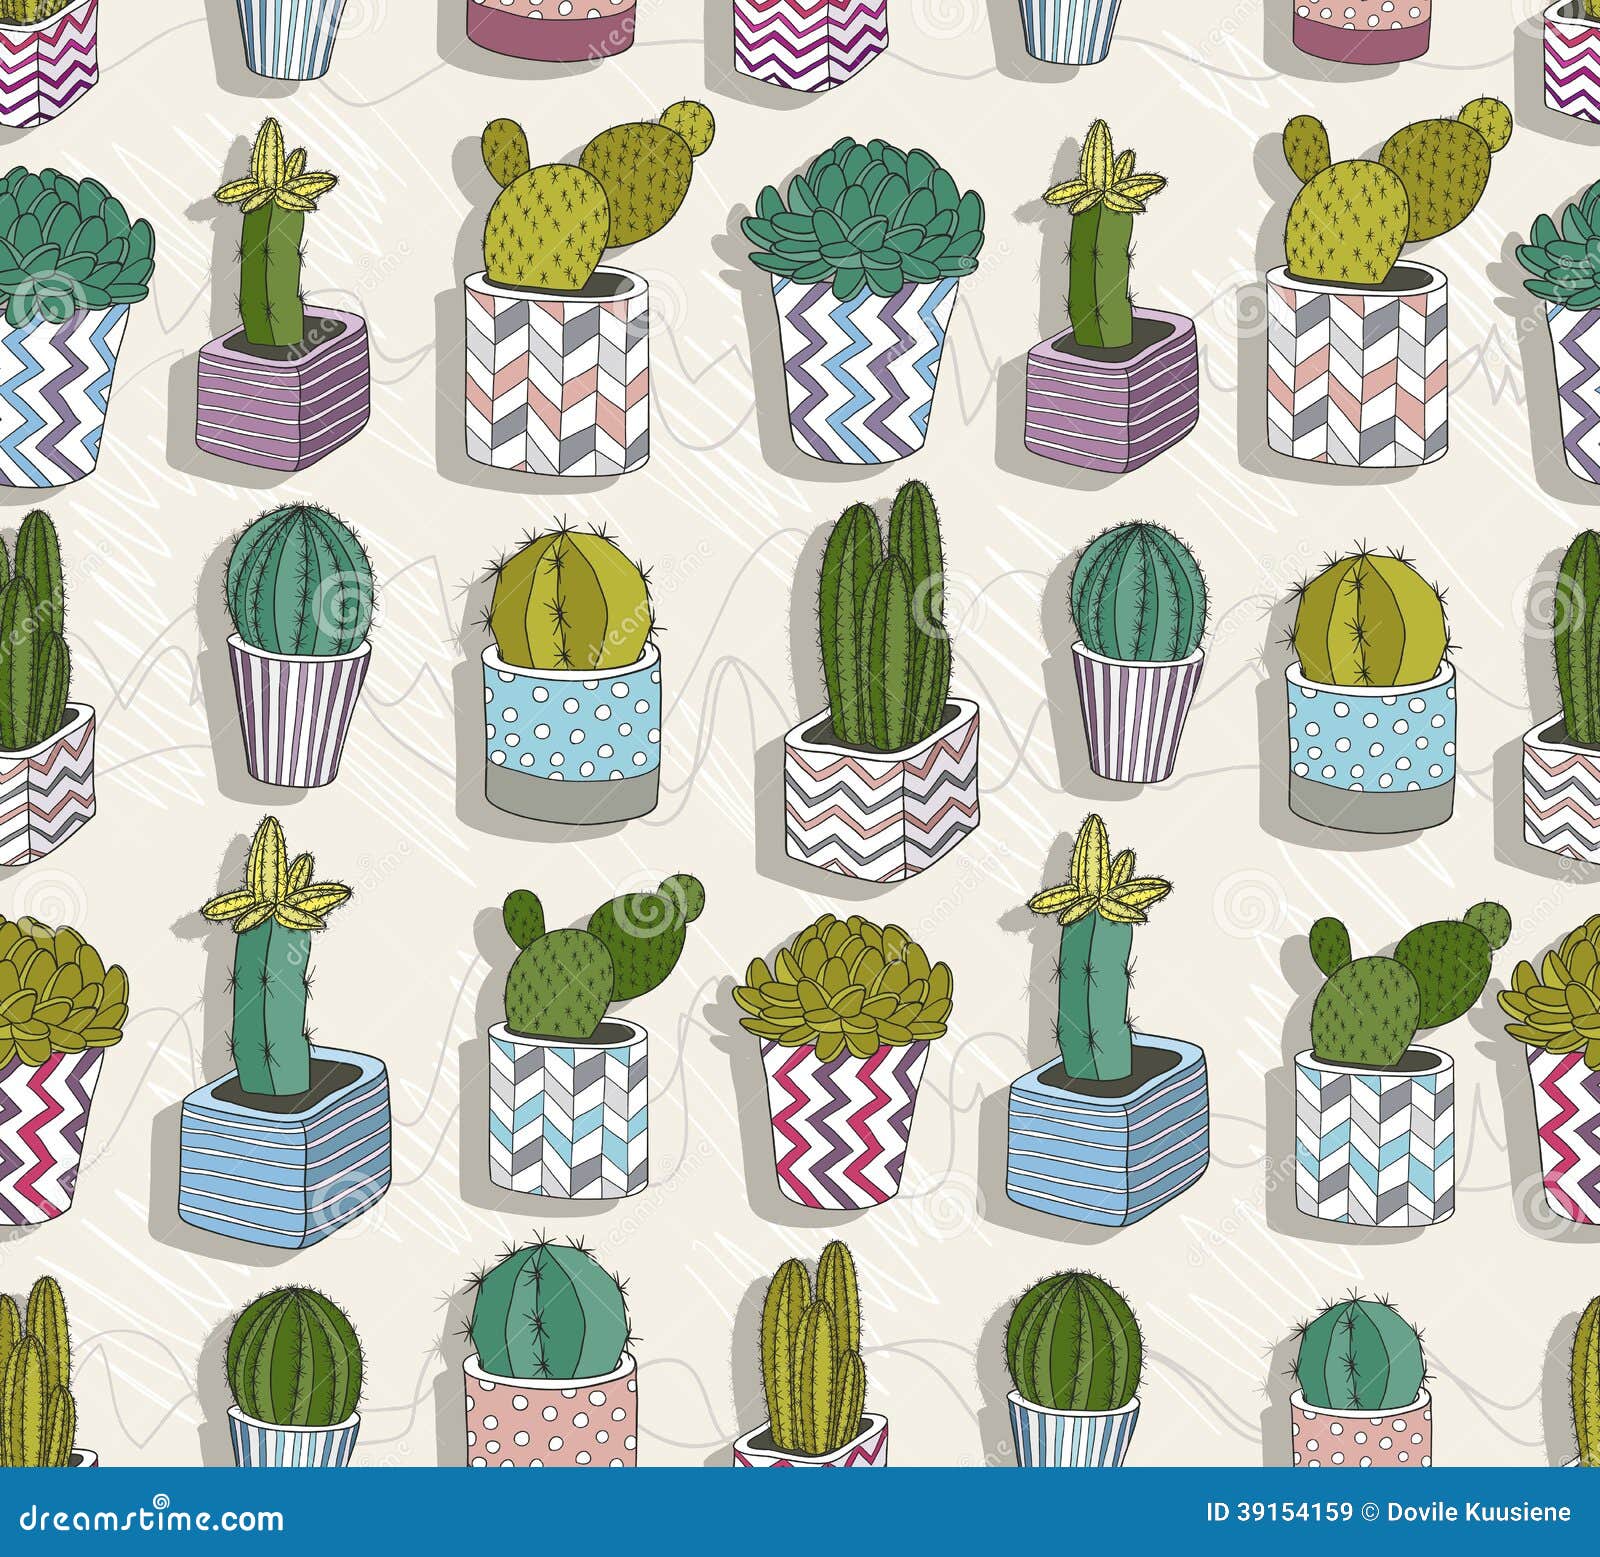 tumblr aztec wallpapers Patter 39154159 Cute Image: Seamless  Vector Stock Cactus